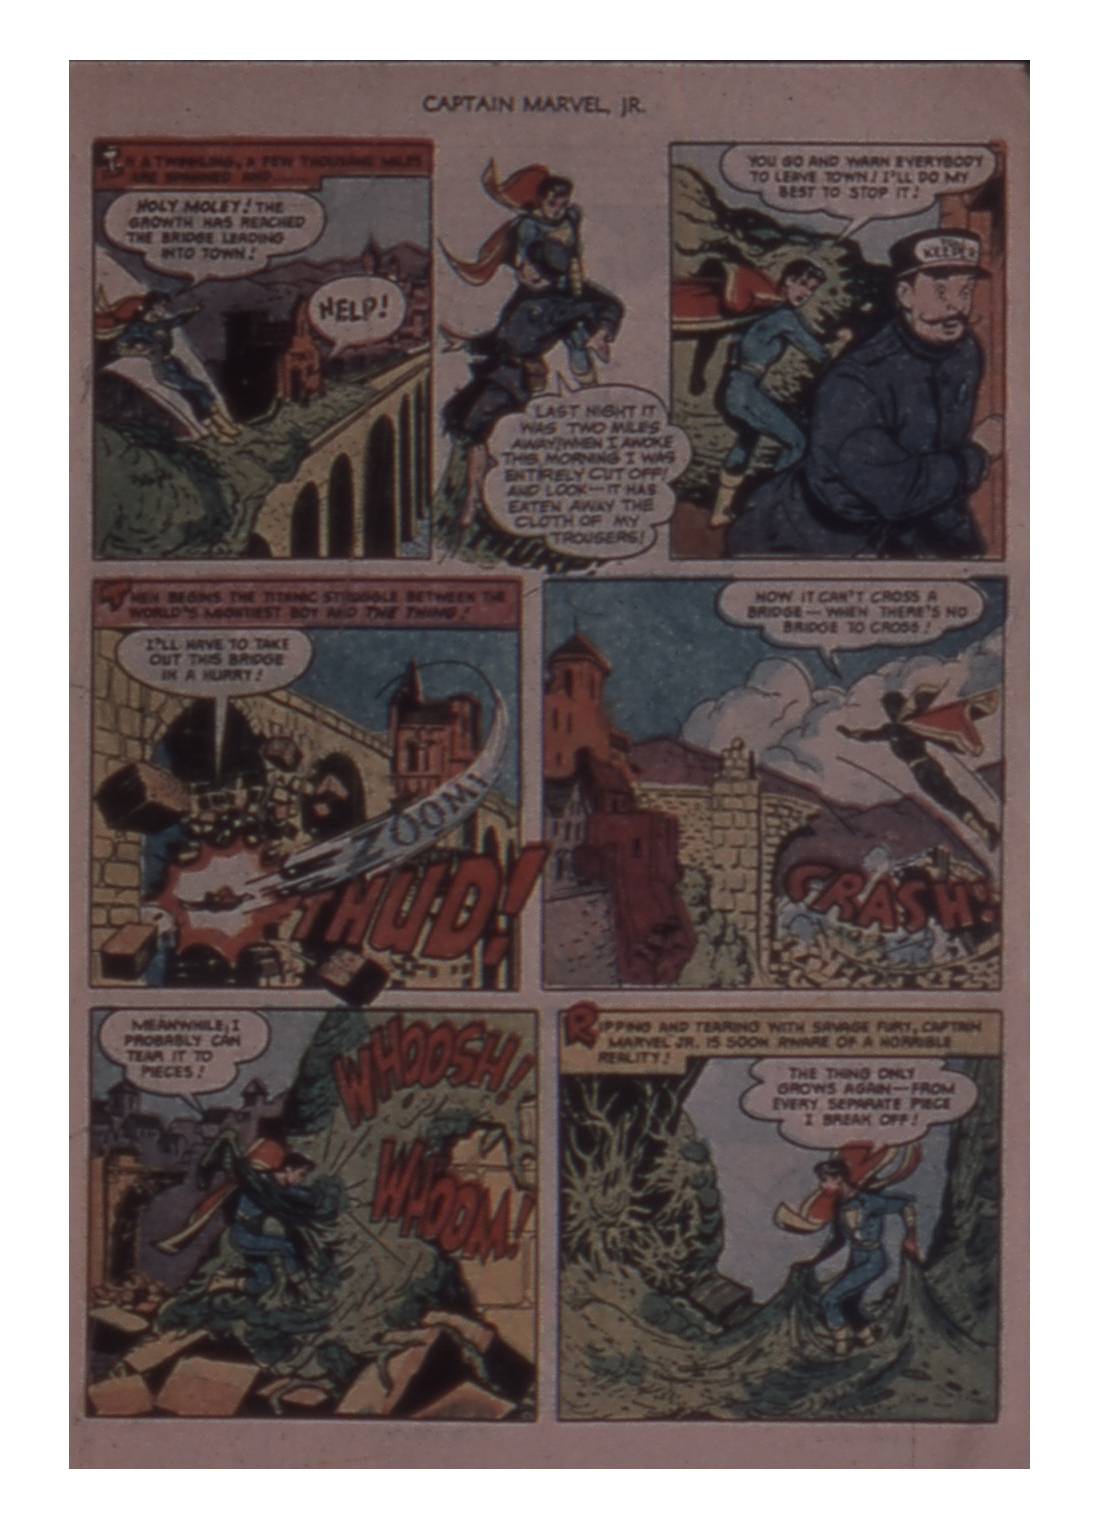 Read online Captain Marvel, Jr. comic -  Issue #103 - 7